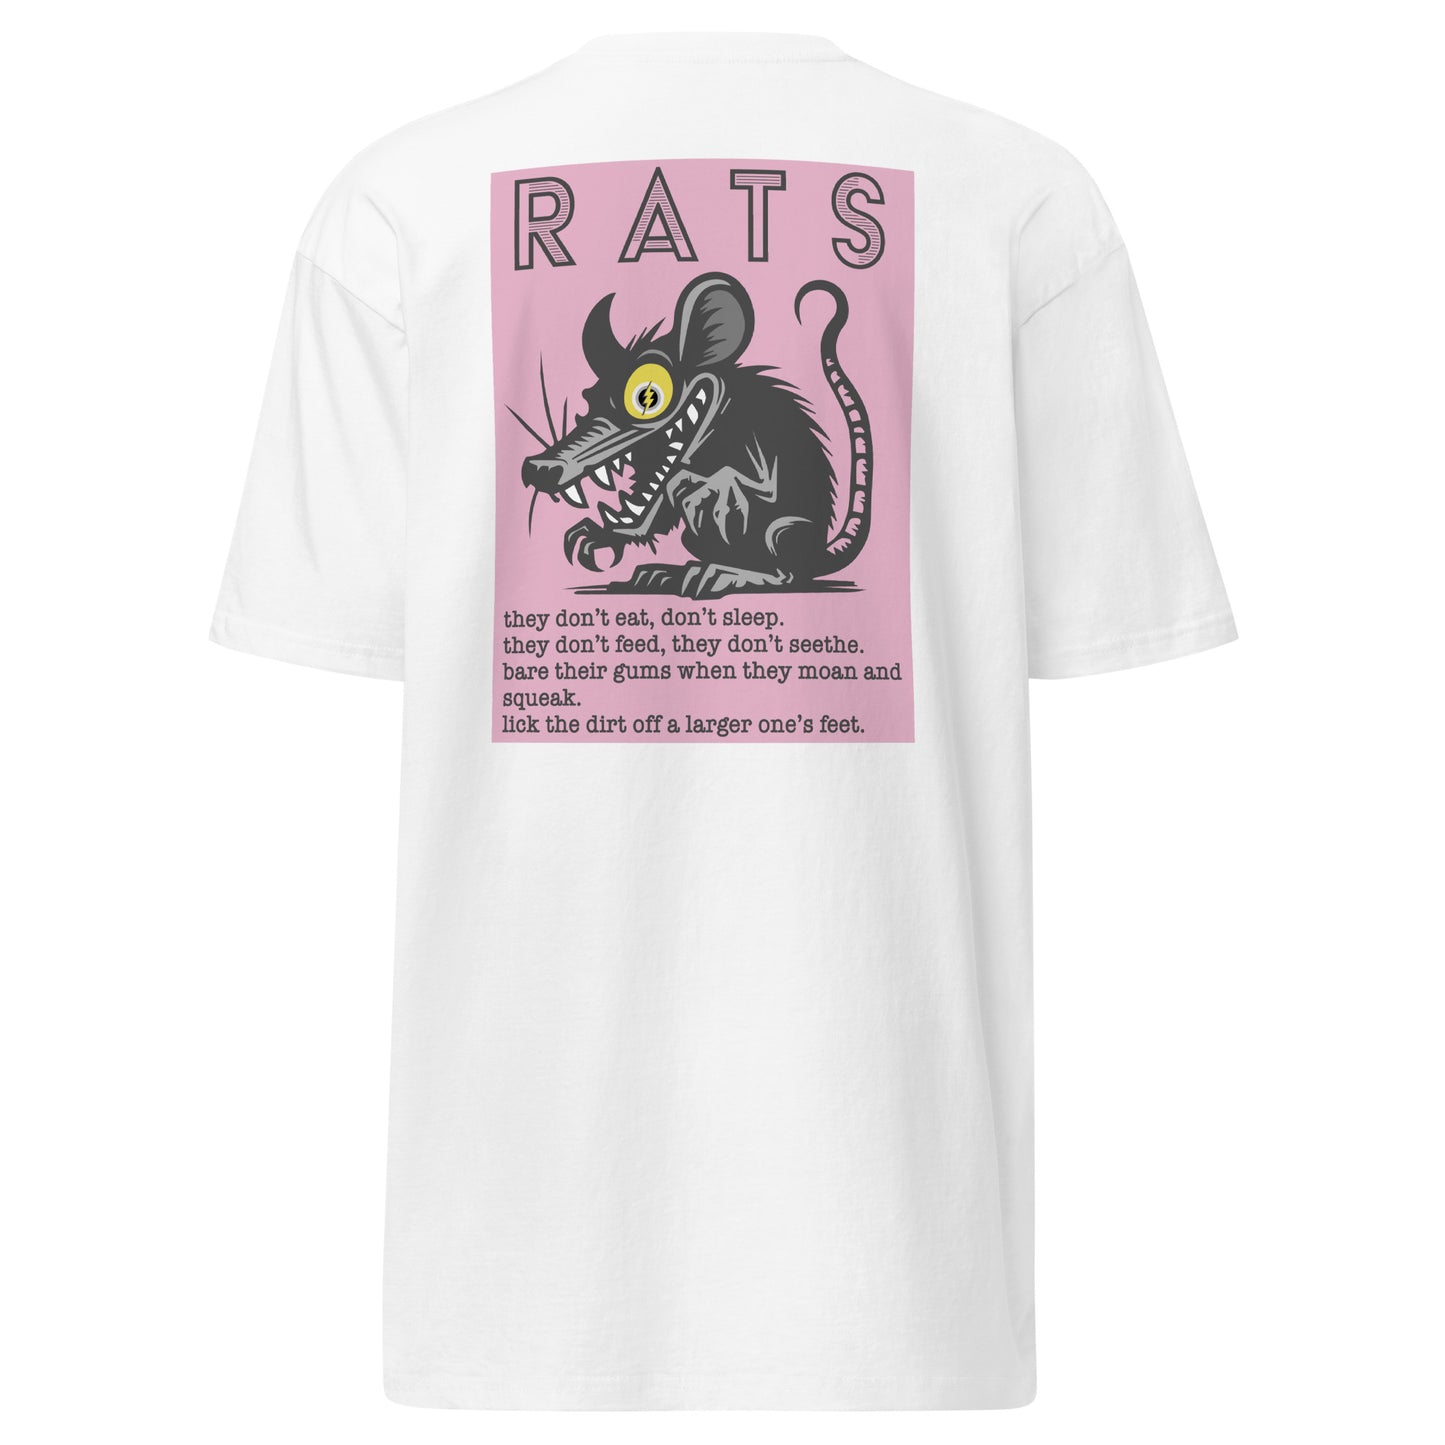 PJ RATS - FRONT LEFT AND BACK - Men’s premium heavyweight tee